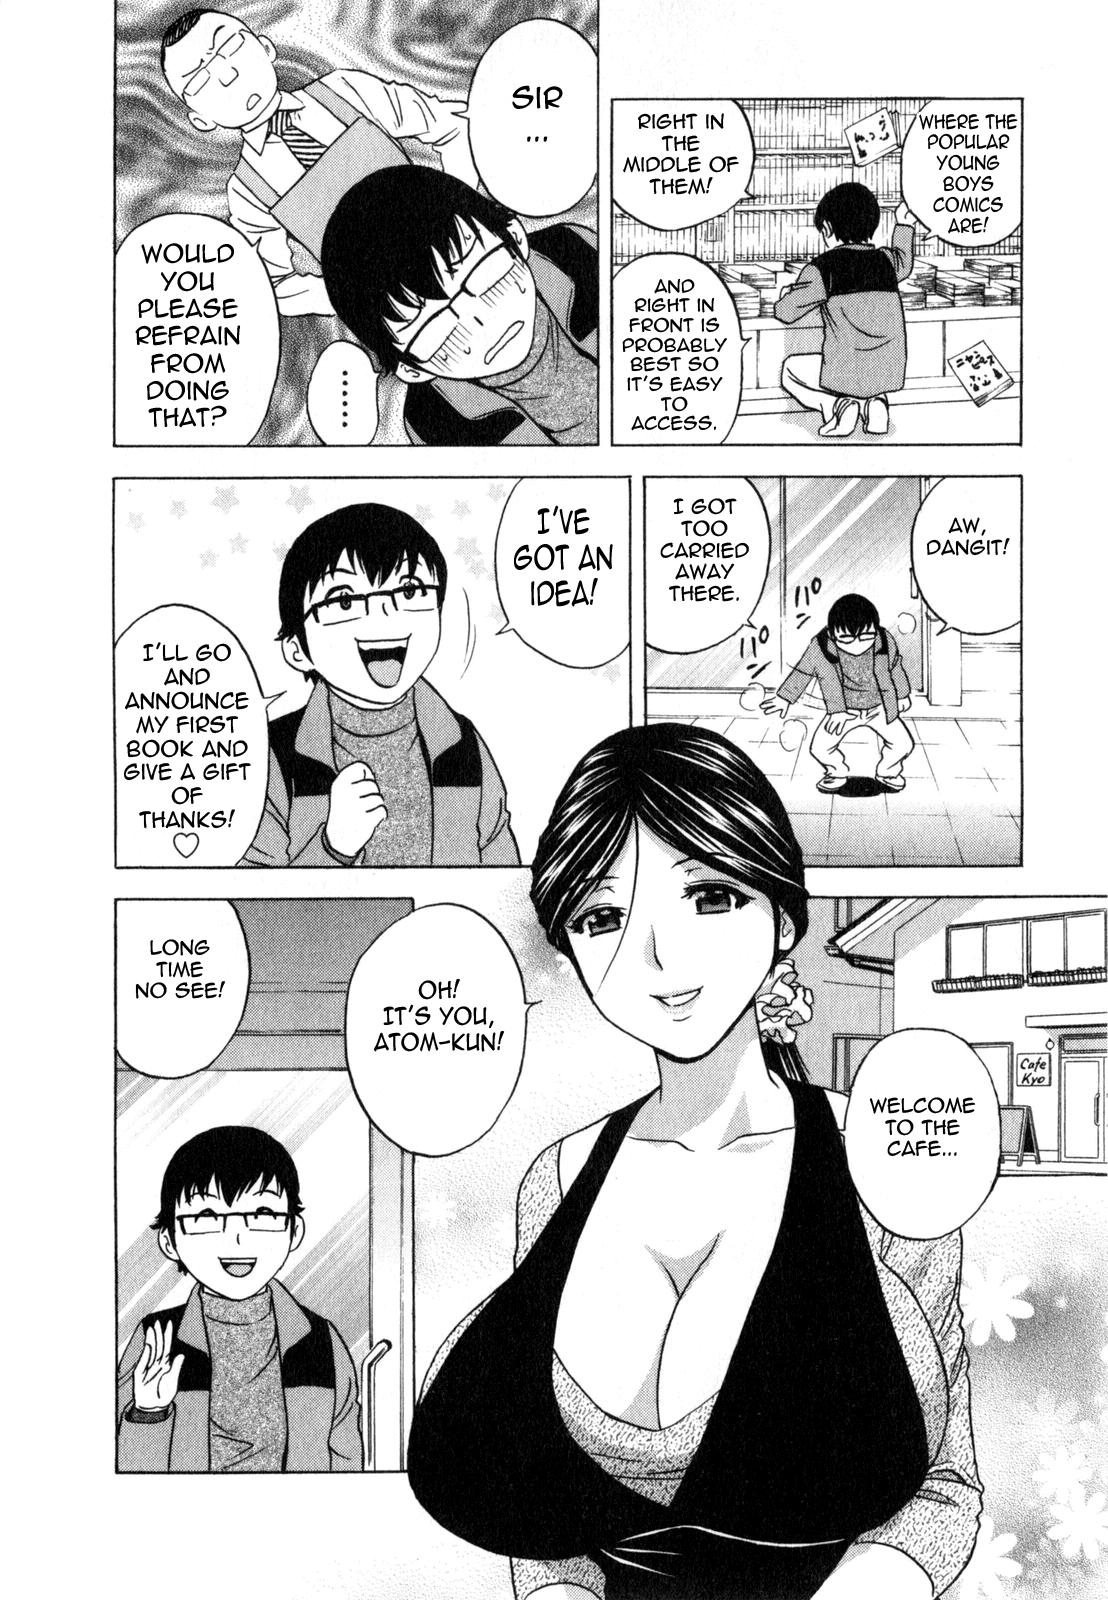 [Hidemaru] Life with Married Women Just Like a Manga 3 - Ch. 1-4 [English] {Tadanohito} 13